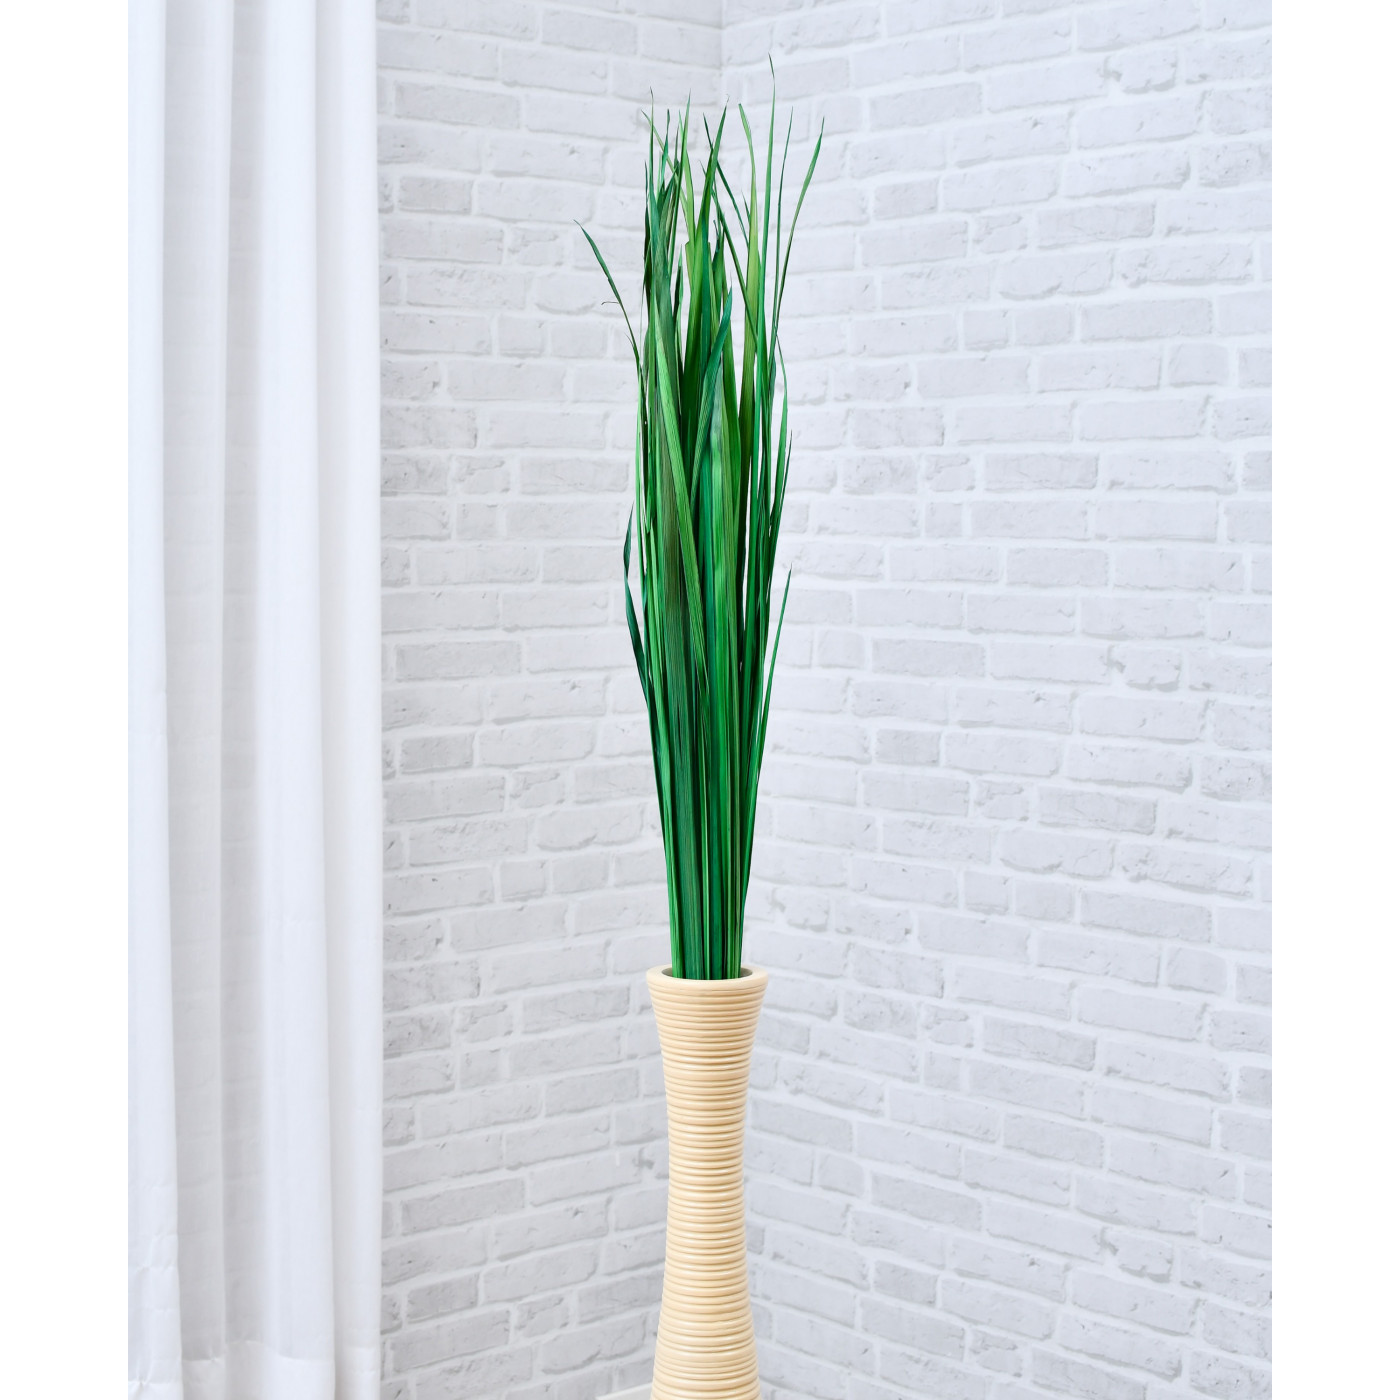 Leewadee Dried coloured palm leaf bunch for floor vases decorative grass twig bunch 120 cm Palm Leaf brown